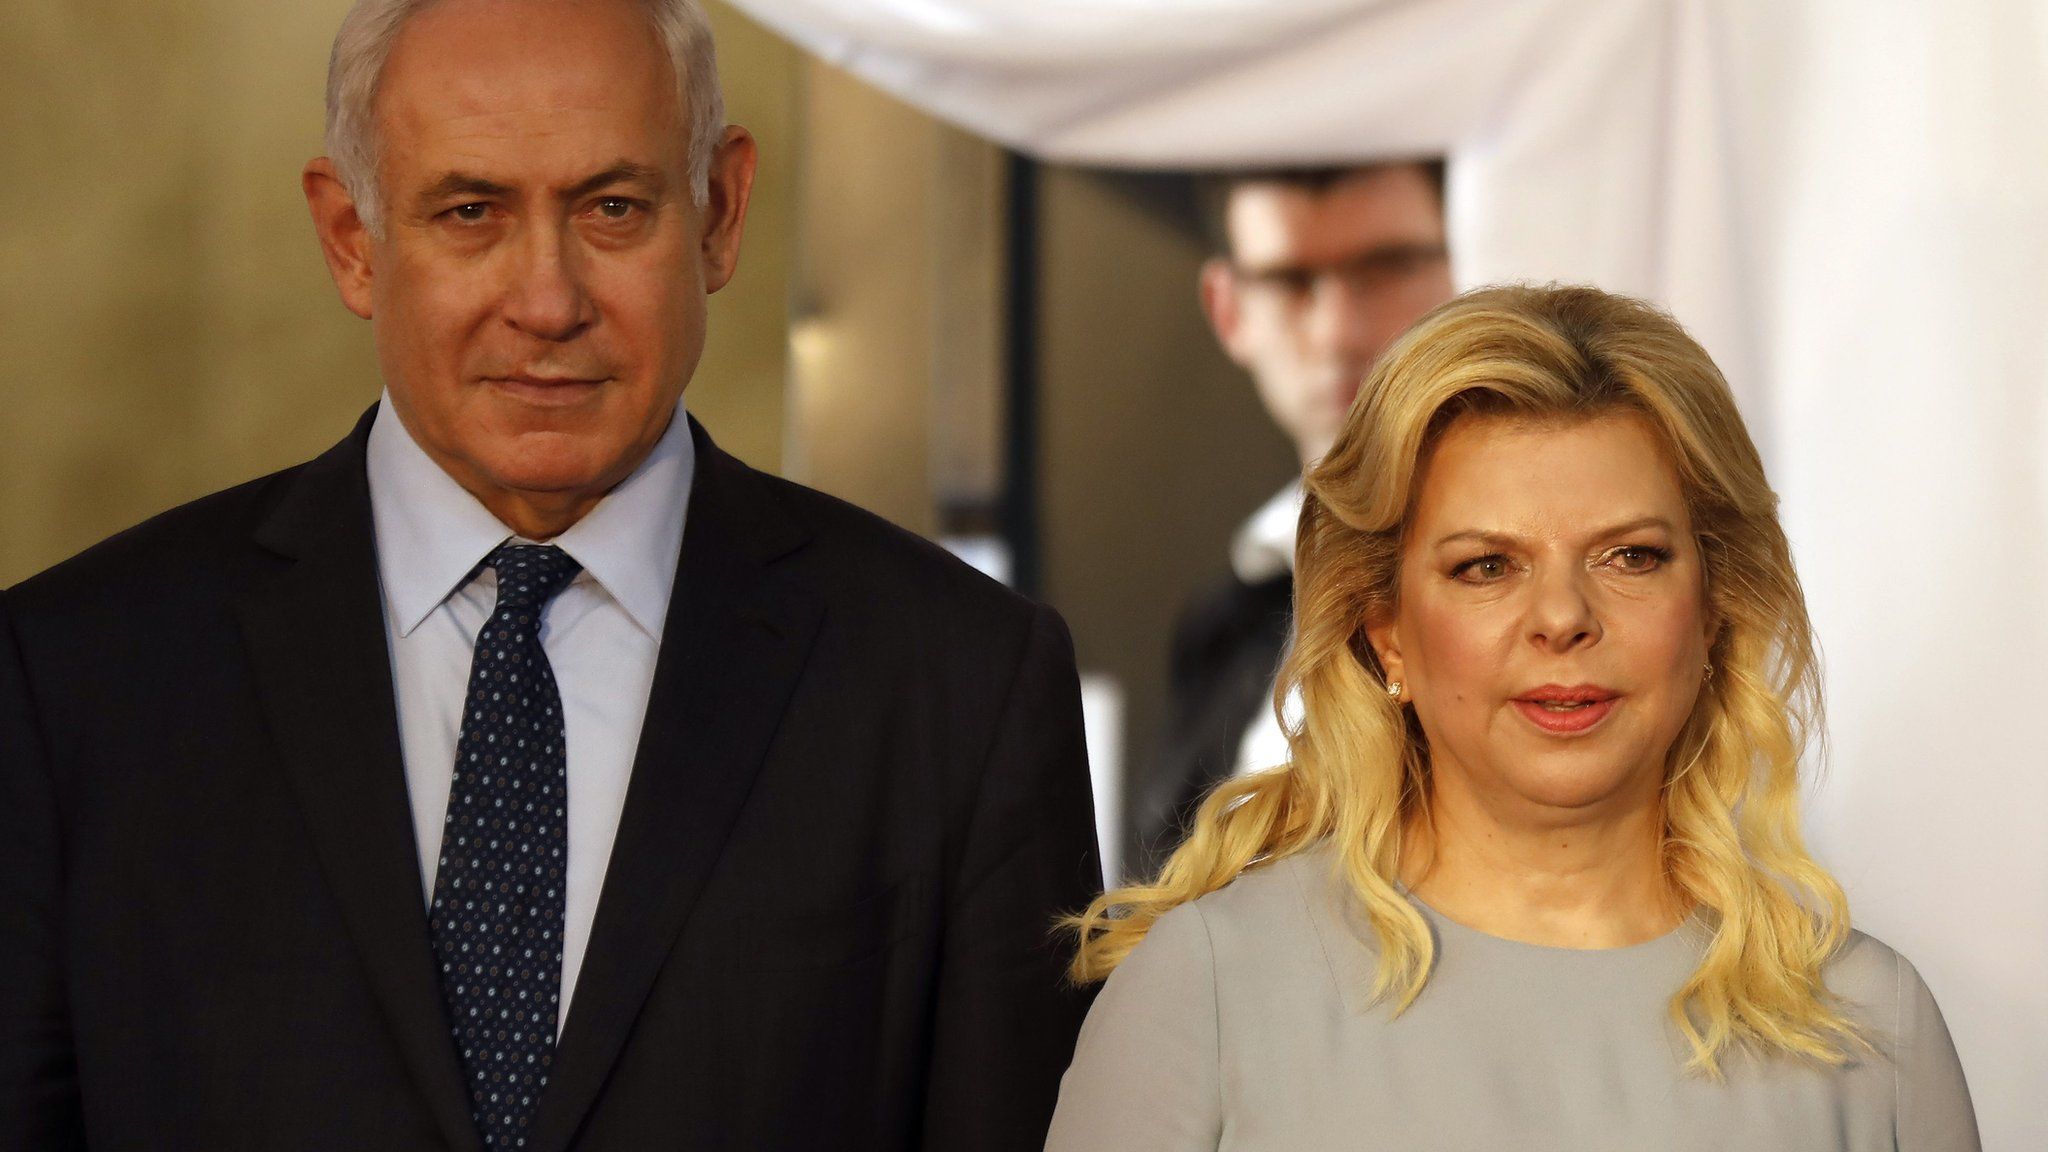 Israeli Prime Minister Benjamin Netanyahu and his wife Sara at the PM's office in Jerusalem, June 6, 2017